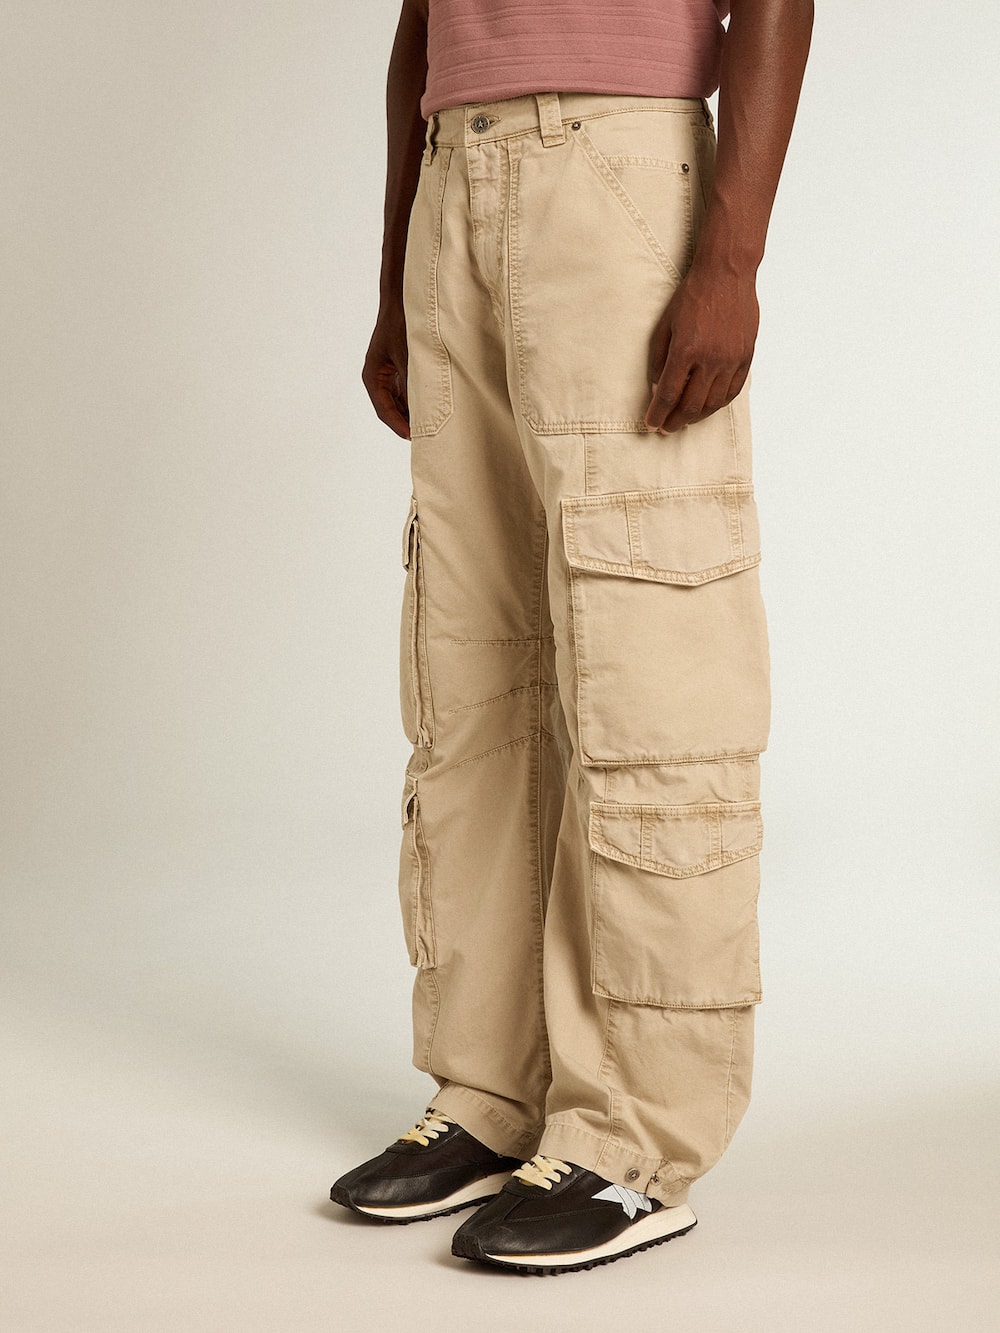 Golden Goose - Men's khaki-colored cotton cargo pants in 